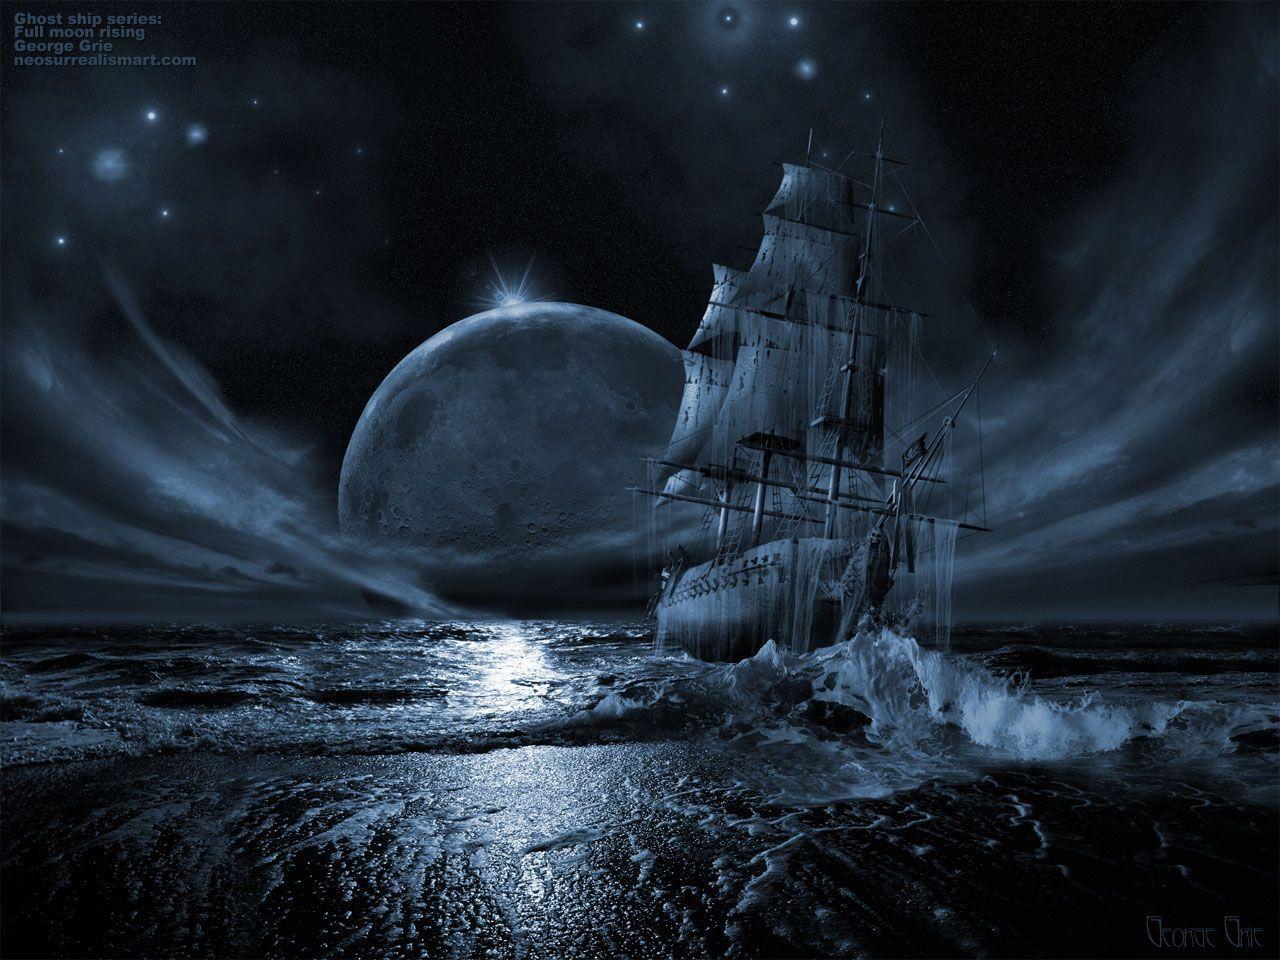 Fantasy Art, 3D Digital Art, Ghost ship series: Full moon rising